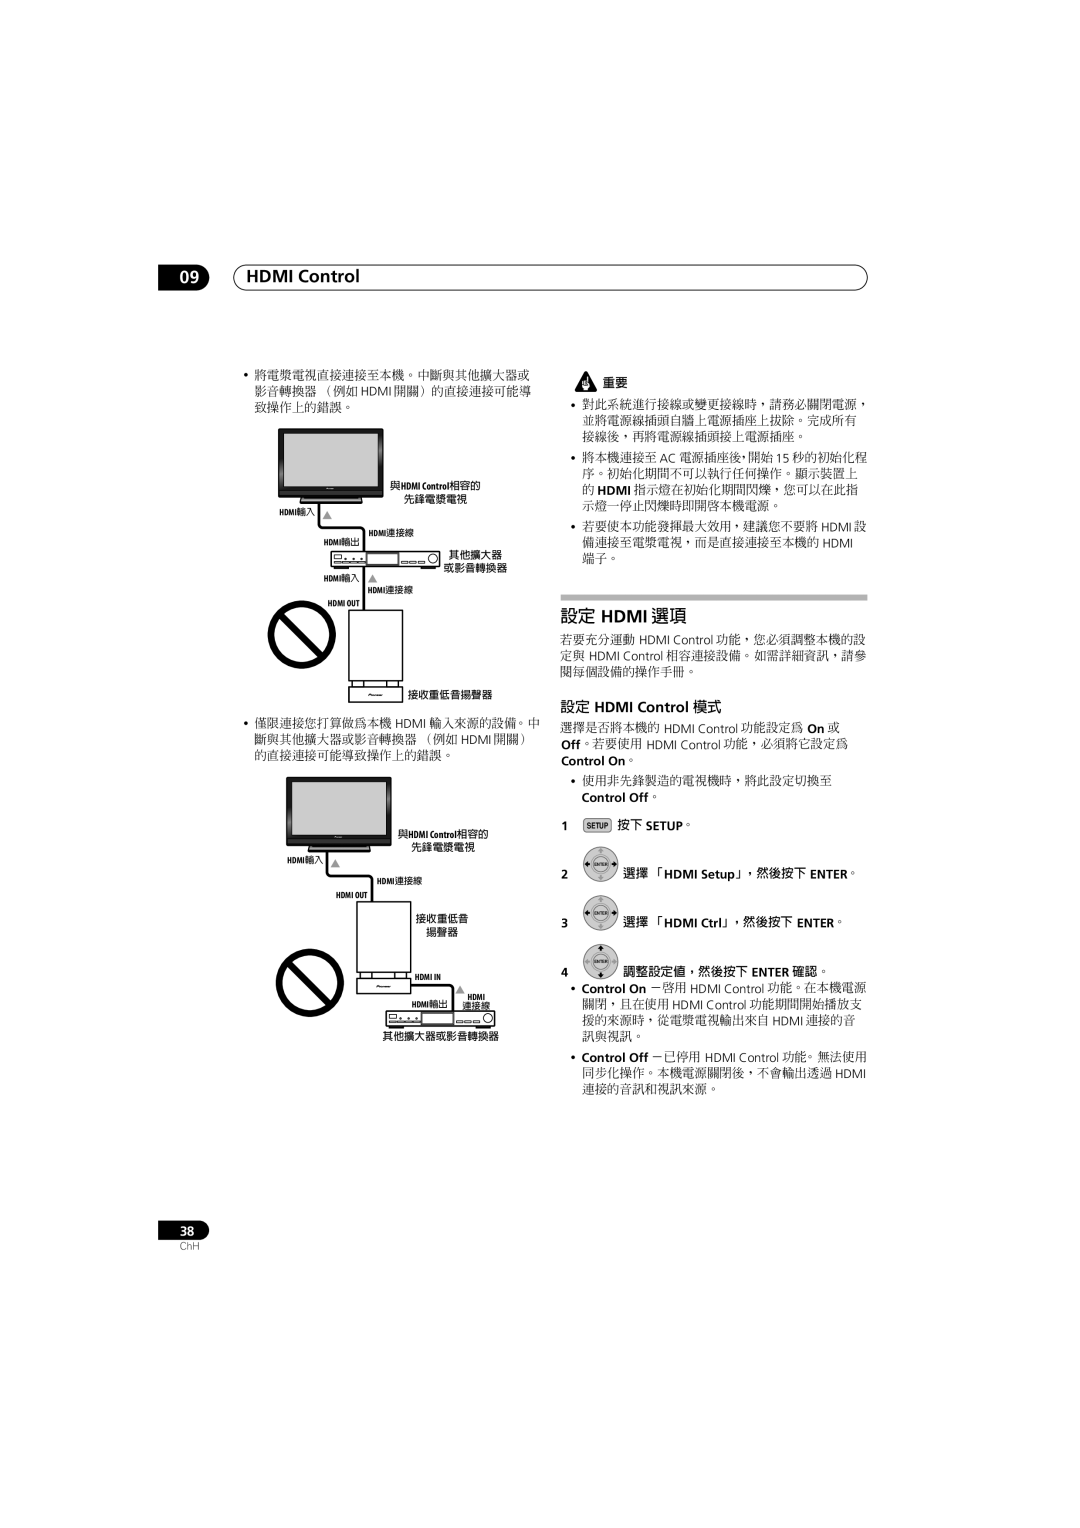 Pioneer SSP-LX70ST, SX-LX70W, AS-LX70, HTP-LX70 manual 設定 Hdmi 選項, 設定 HDMI Control 模式, 09HDMI Control, 調整設定值，然後按下 Enter 確認。 